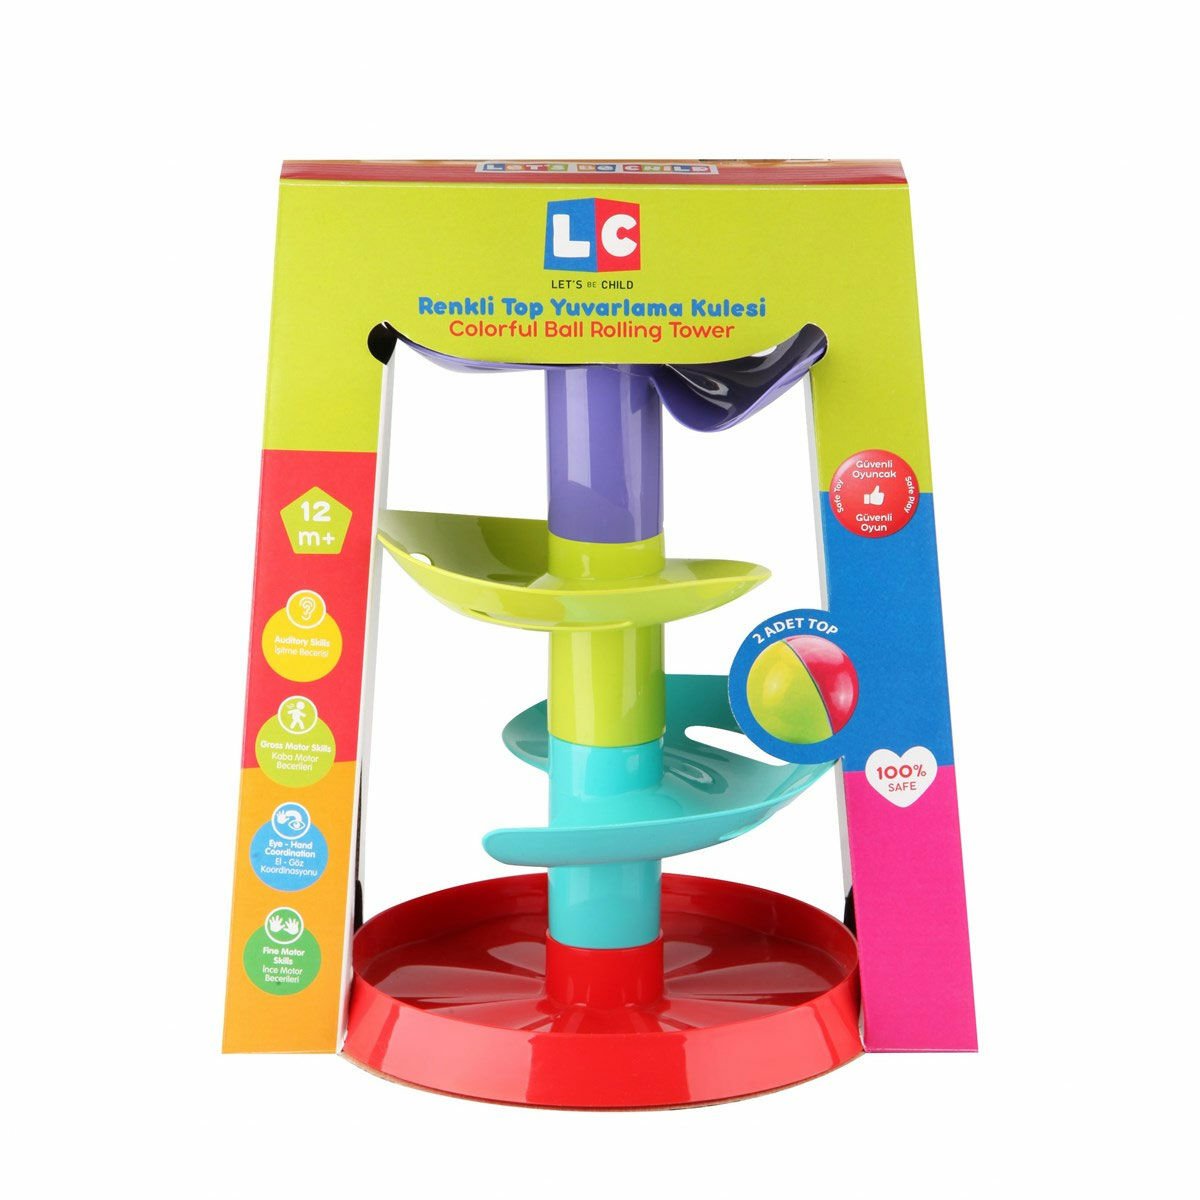 LC-30956 Let's be Child - Renkli Top Yuvarlama Kulesi